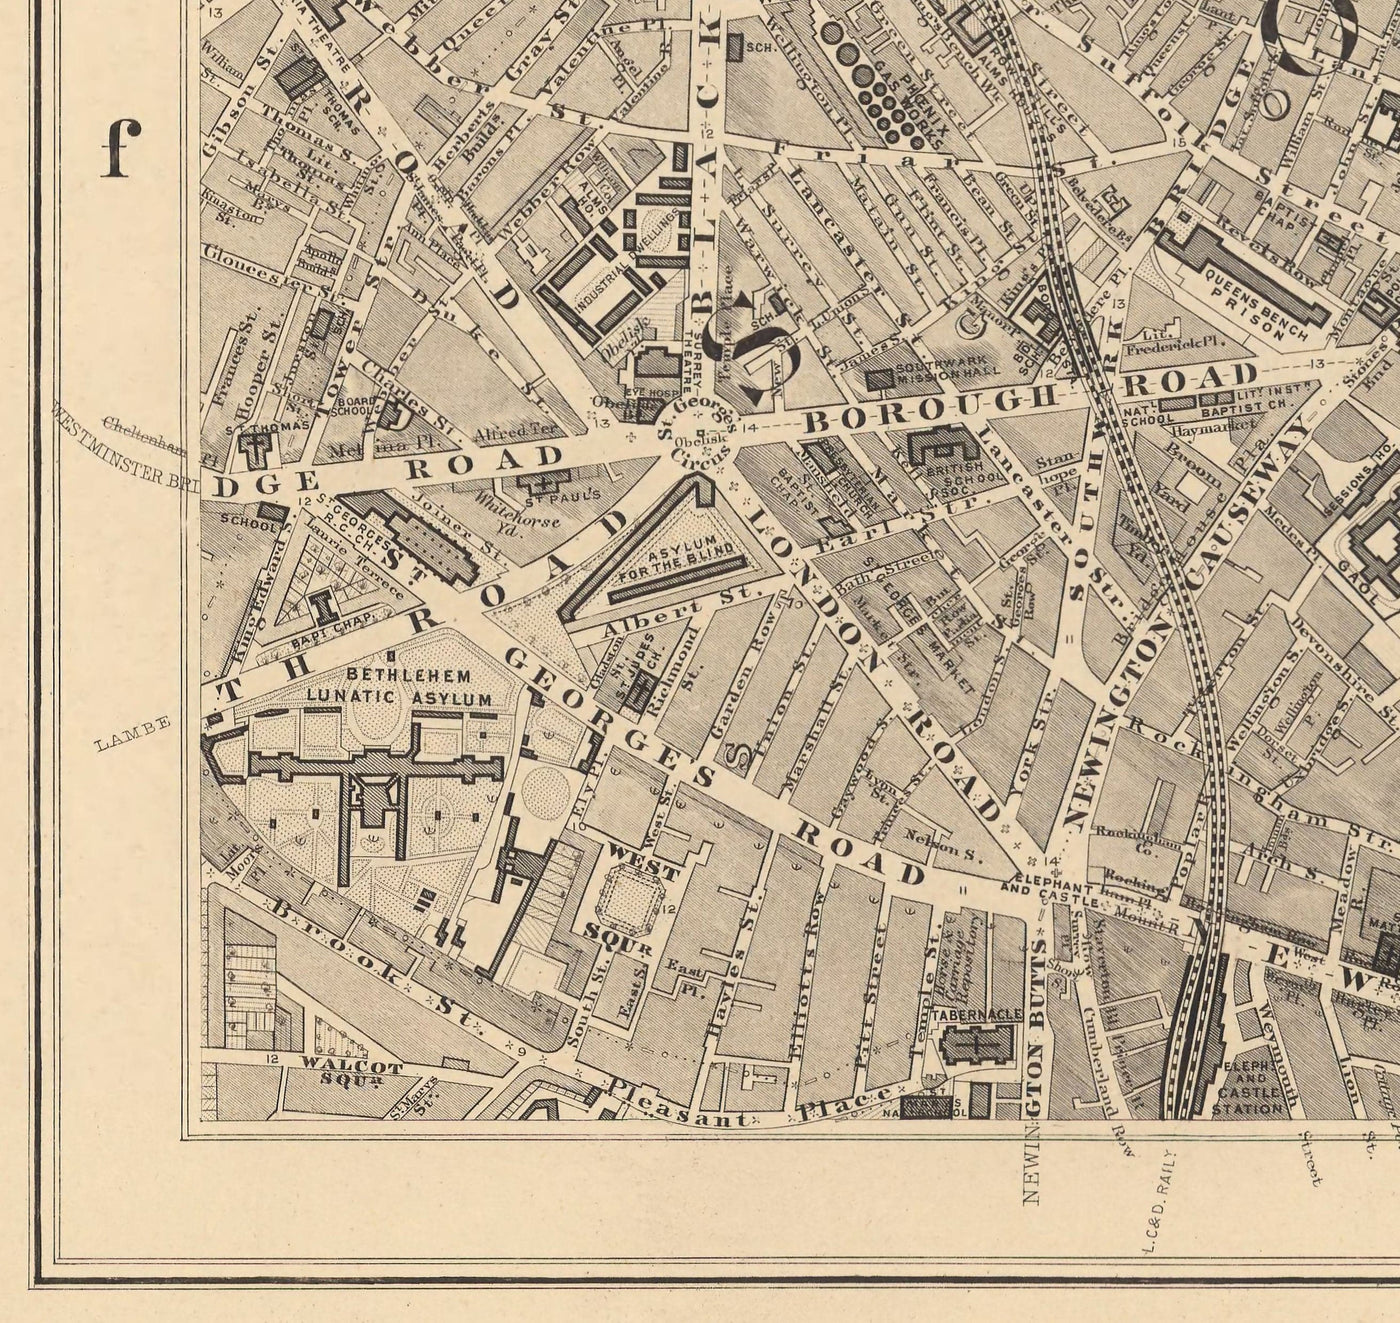 Alte Karte der Stadt London von Edward Stanford, 1862 - London Bridge, St. Pauls, Liverpool St, Bank, Finsbury, Southwark - EC1, EC2, EC3, EC4, E1, E1W, SE1, SE16